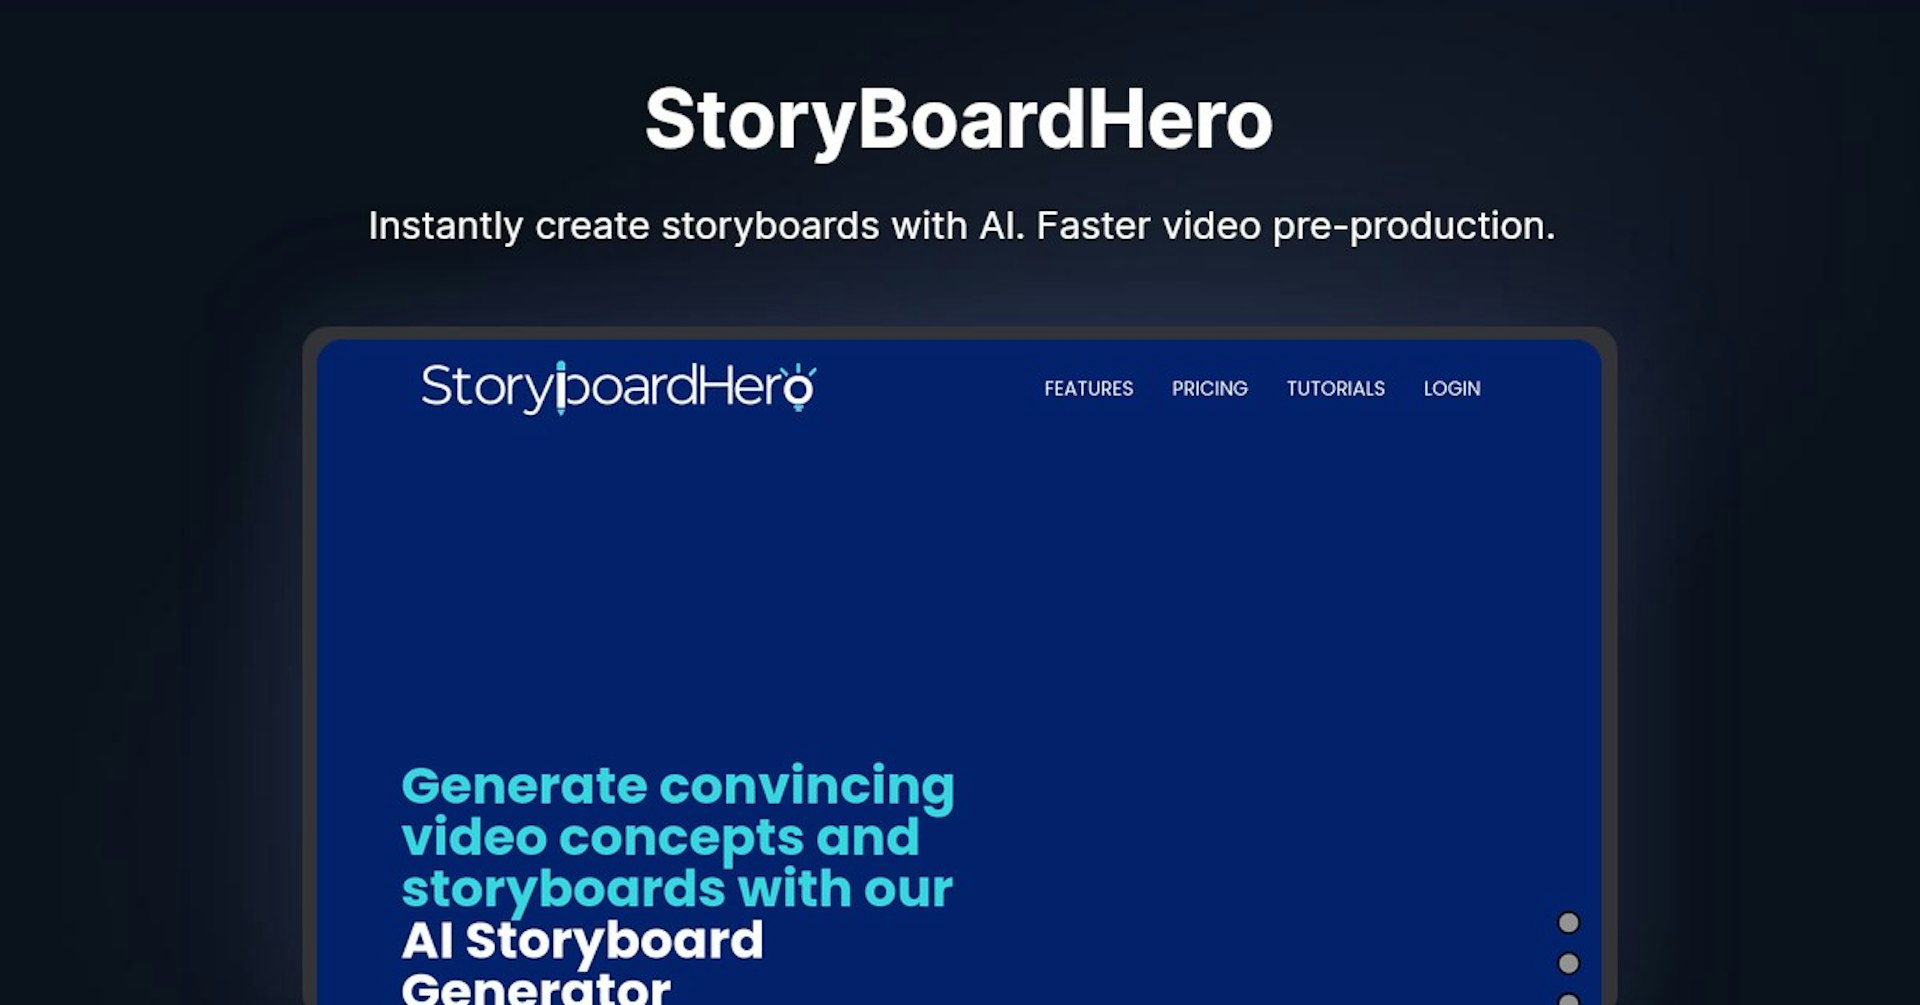 StoryBoardHero